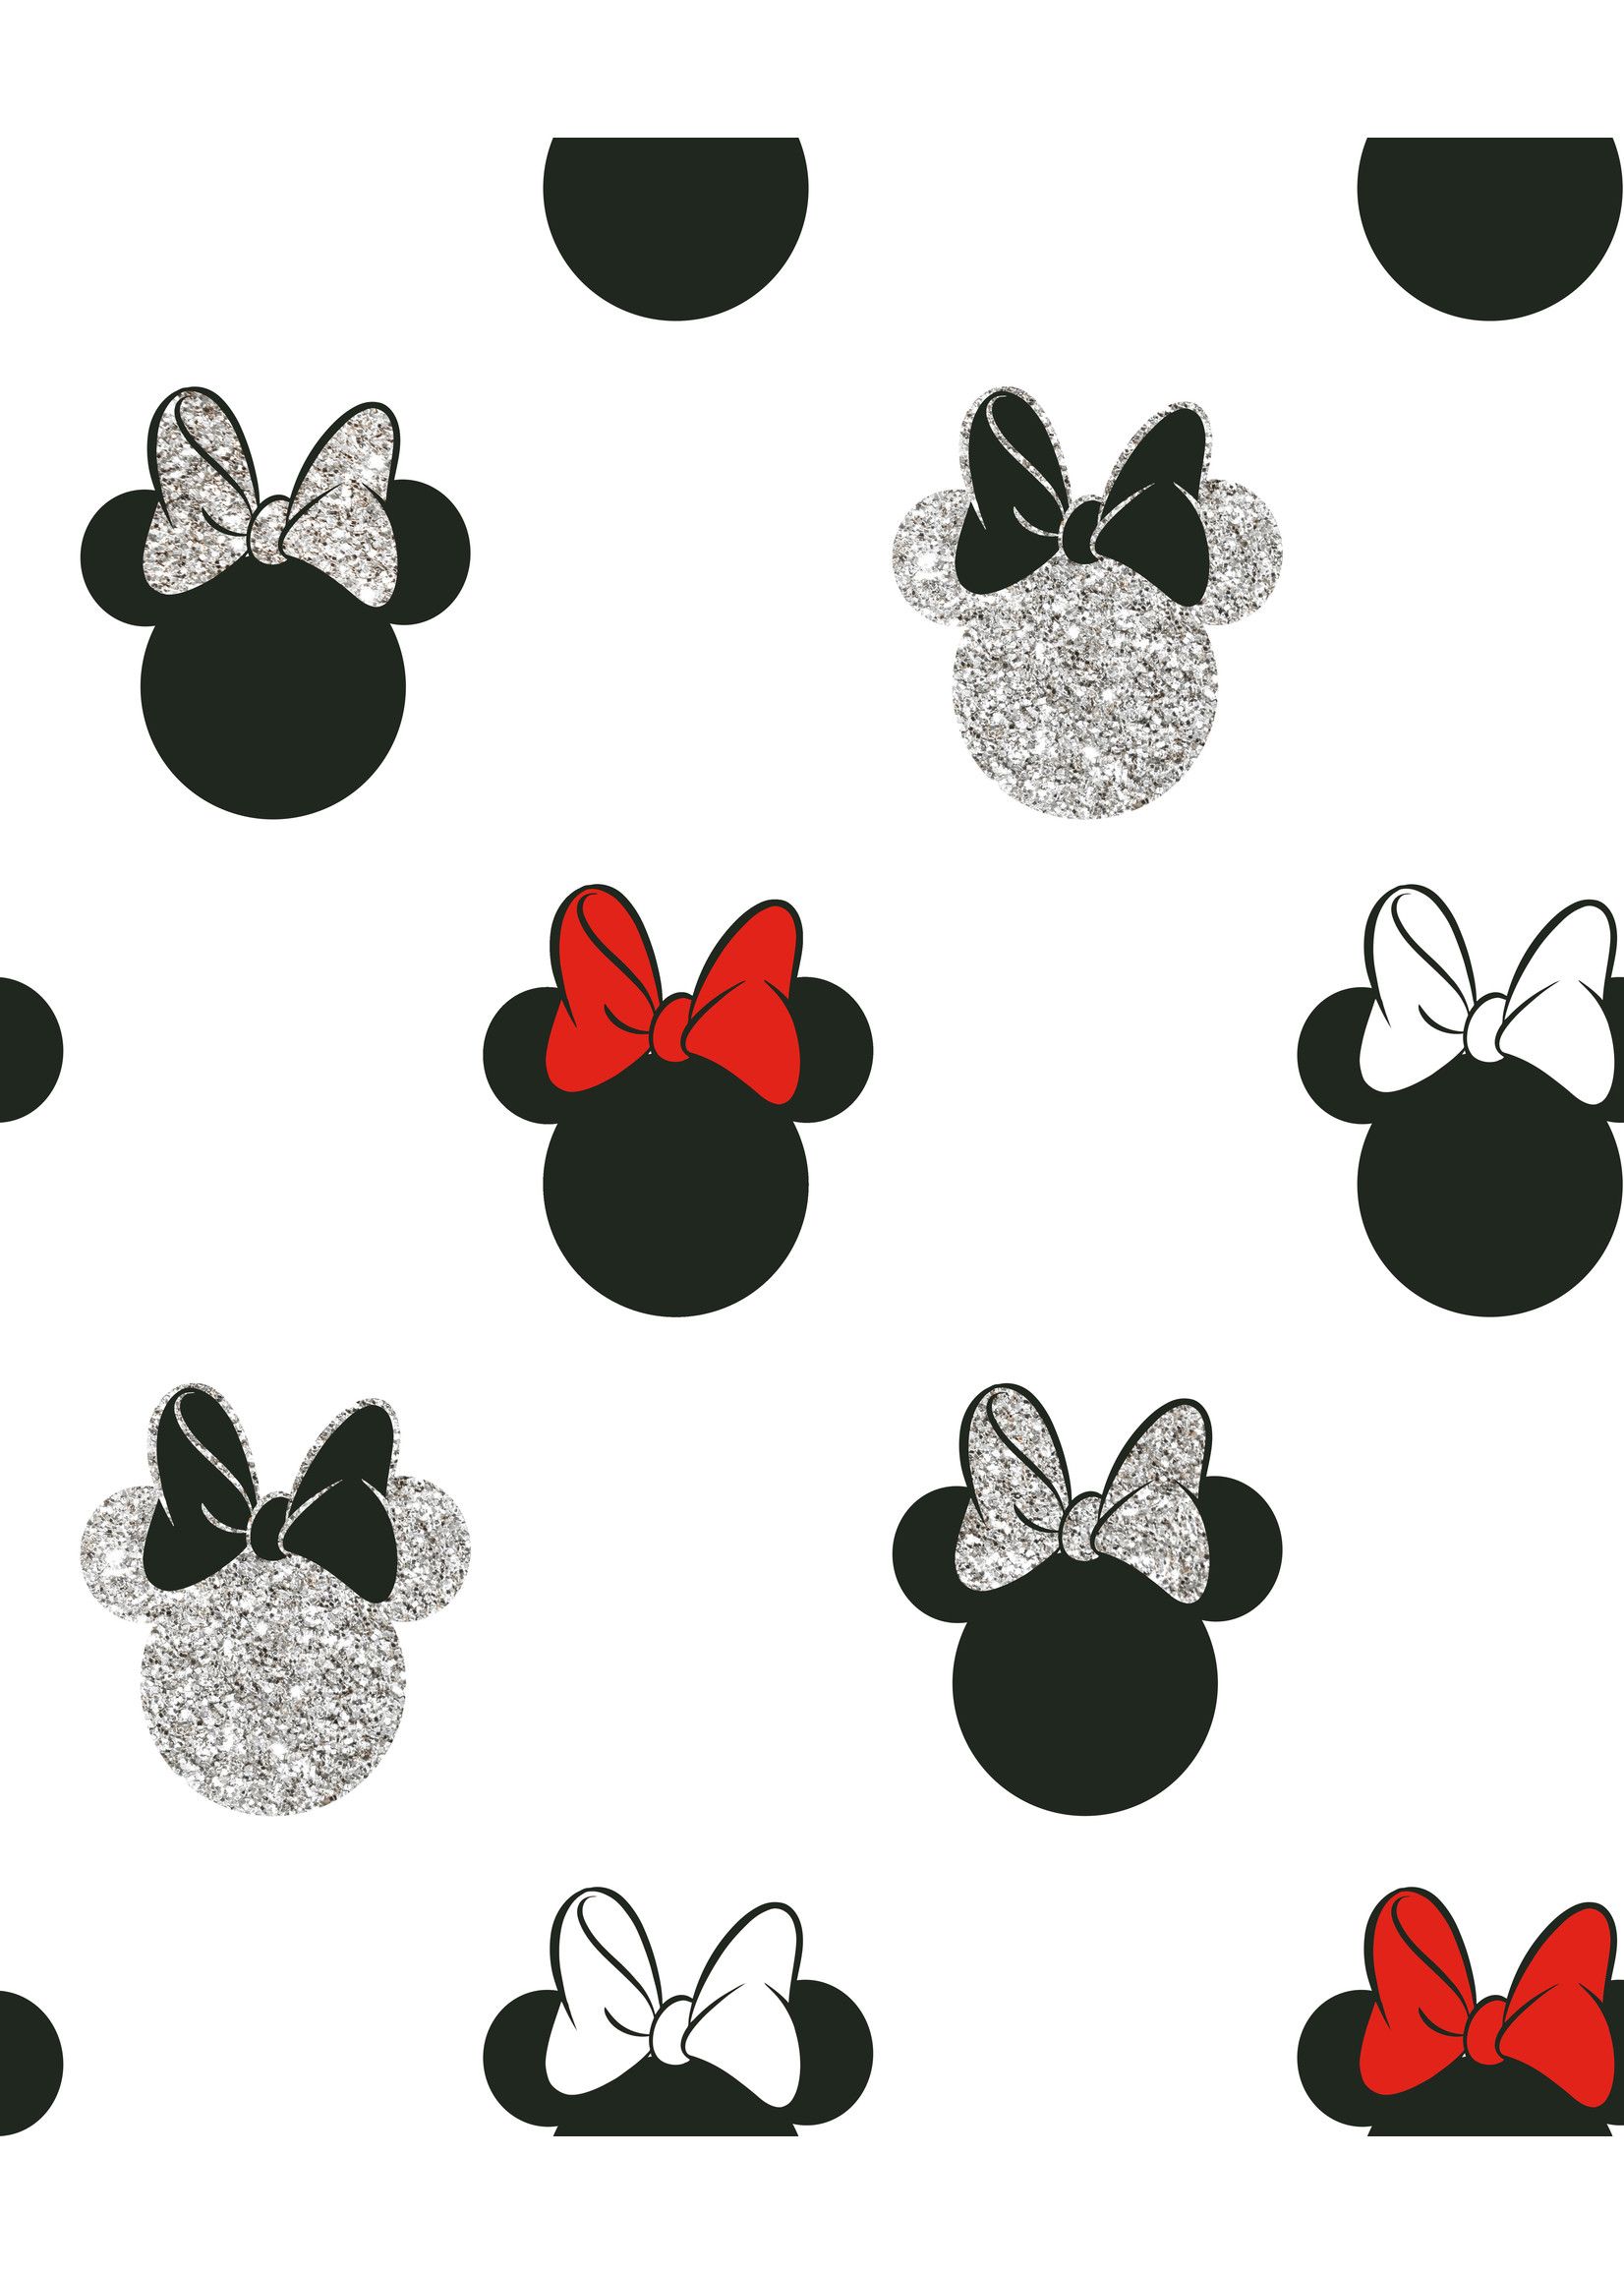  Minnie Mouse Hintergrundbild 1652x2313. Disney Minnie Mouse Wallpaper with Sparks